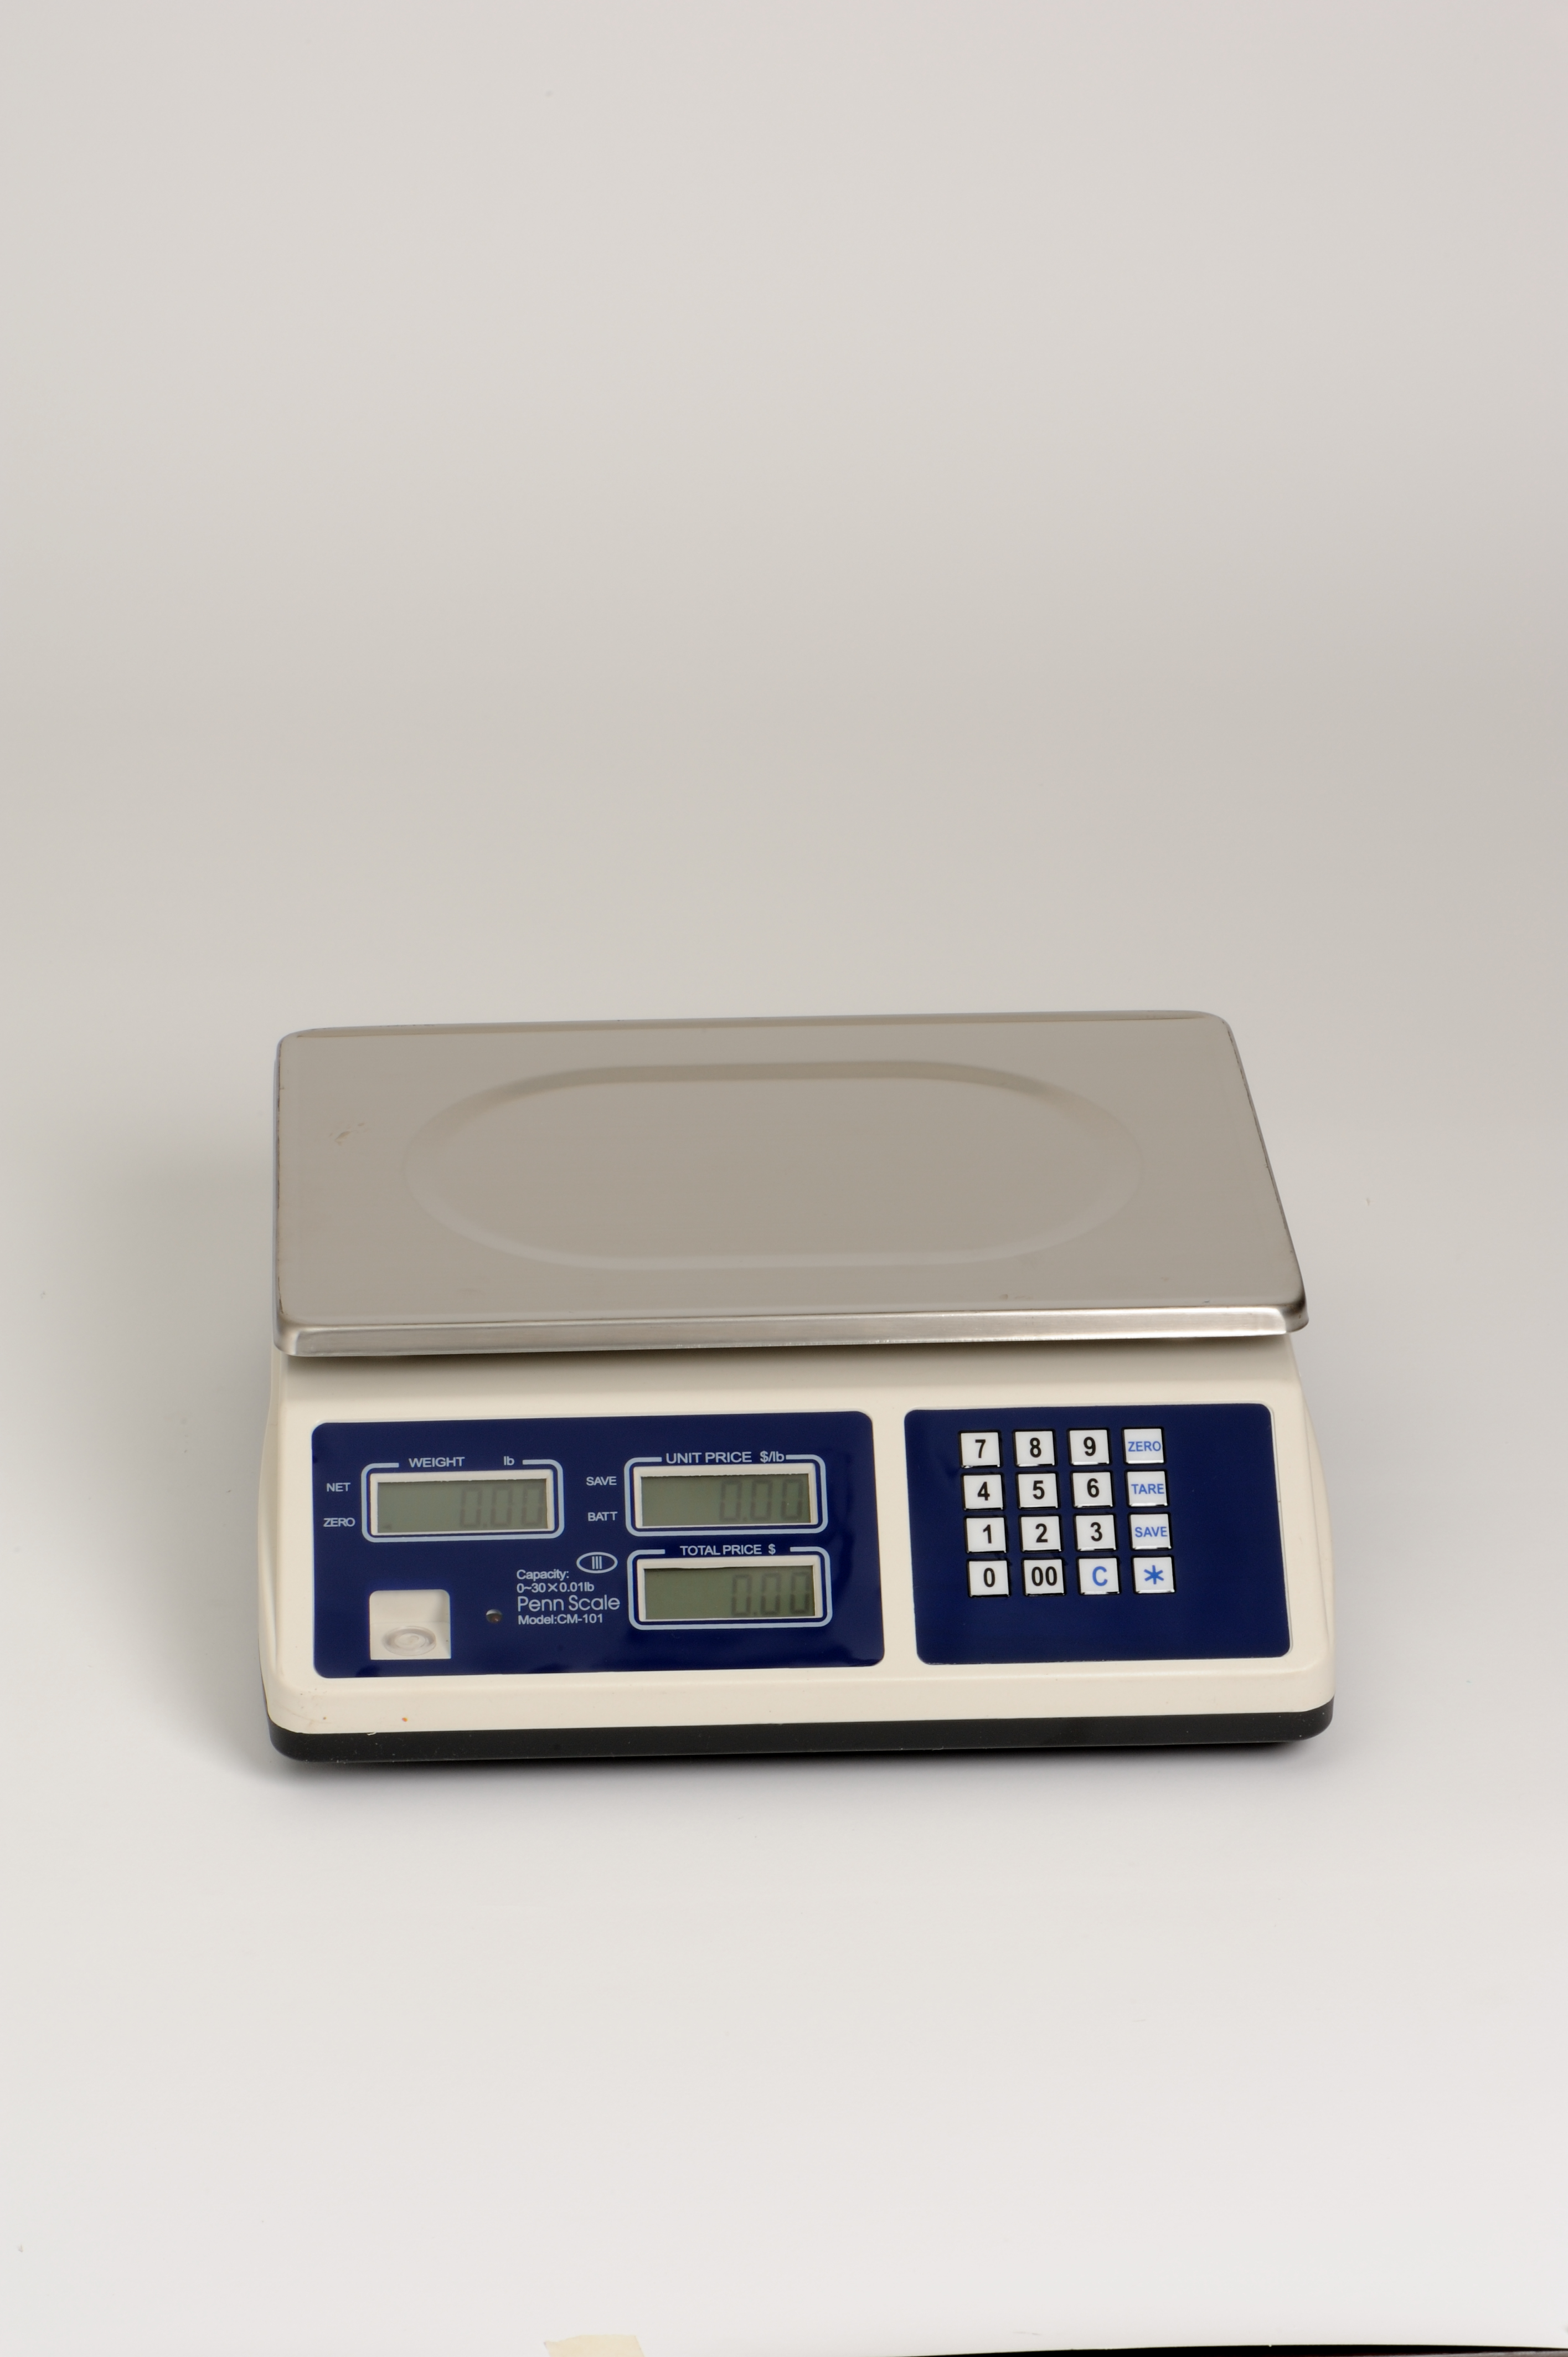 Cm-101 30 Lb Capacity Price Computing Scales